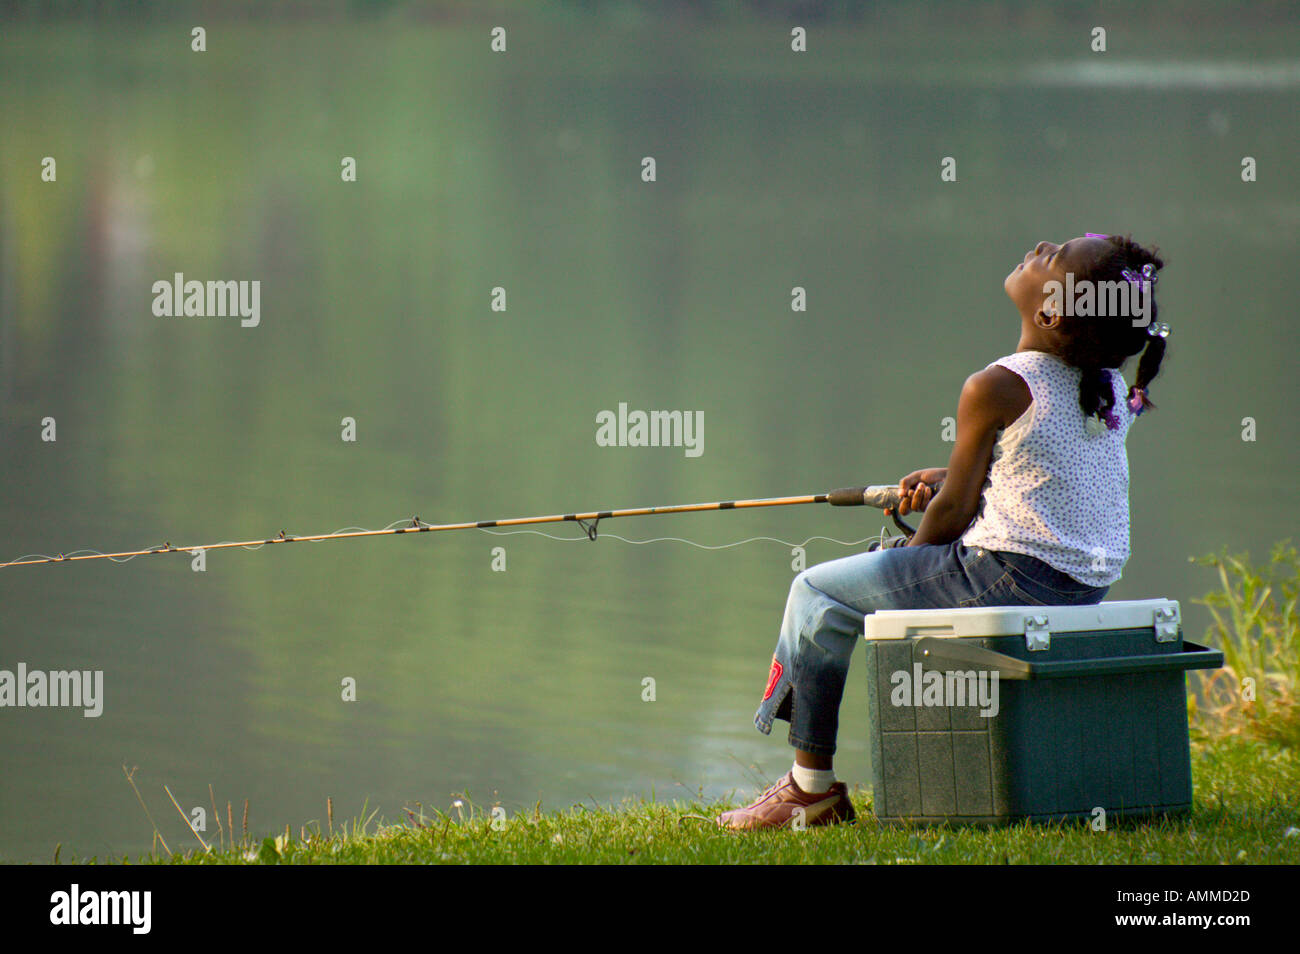 Little girl holding fishing rod on pond background Stock Photo - Alamy